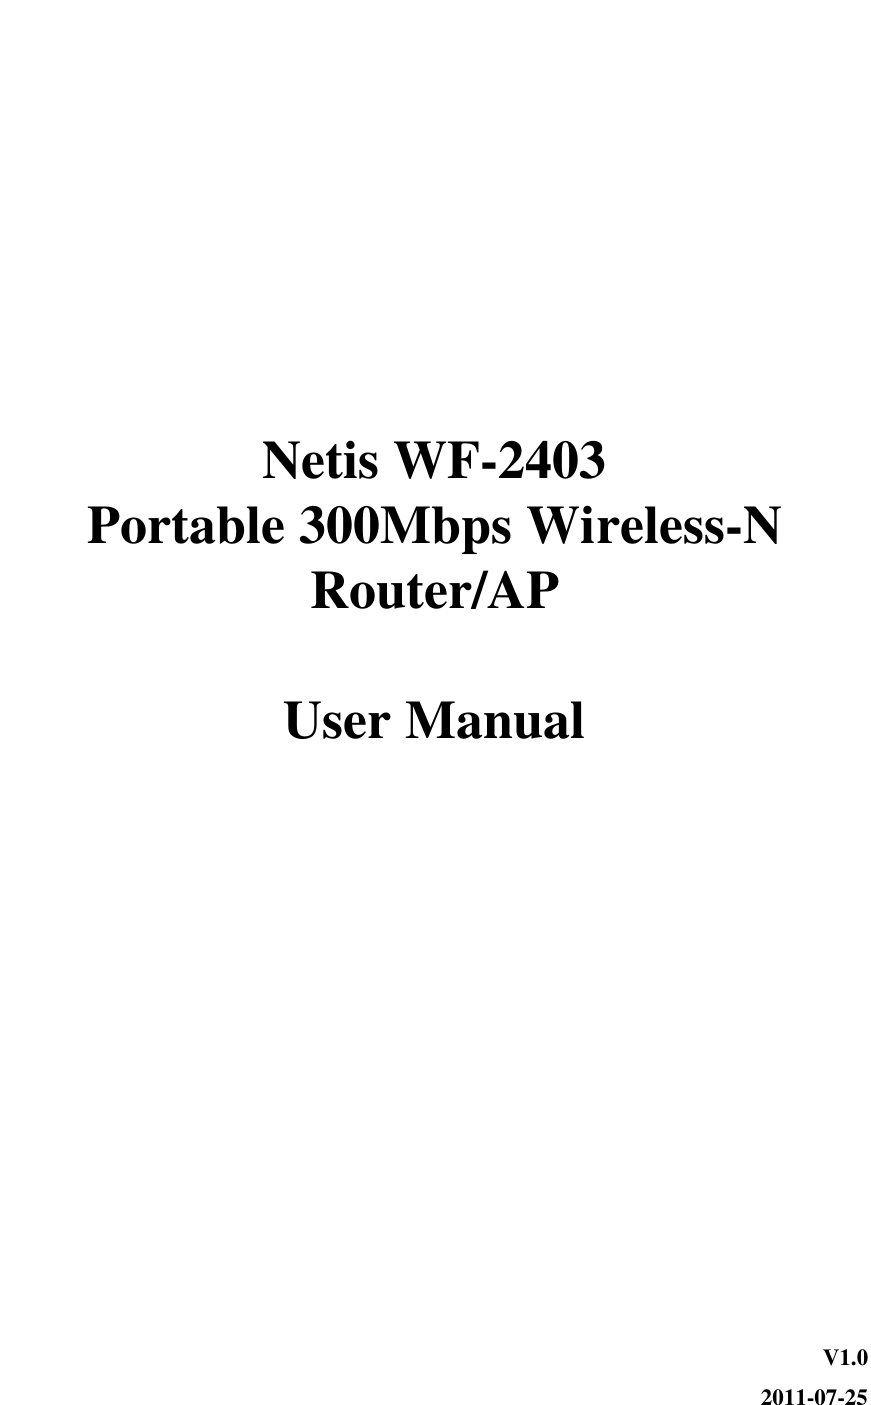       Netis WF-2403 Portable 300Mbps Wireless-N Router/AP  User Manual       V1.0 2011-07-25 